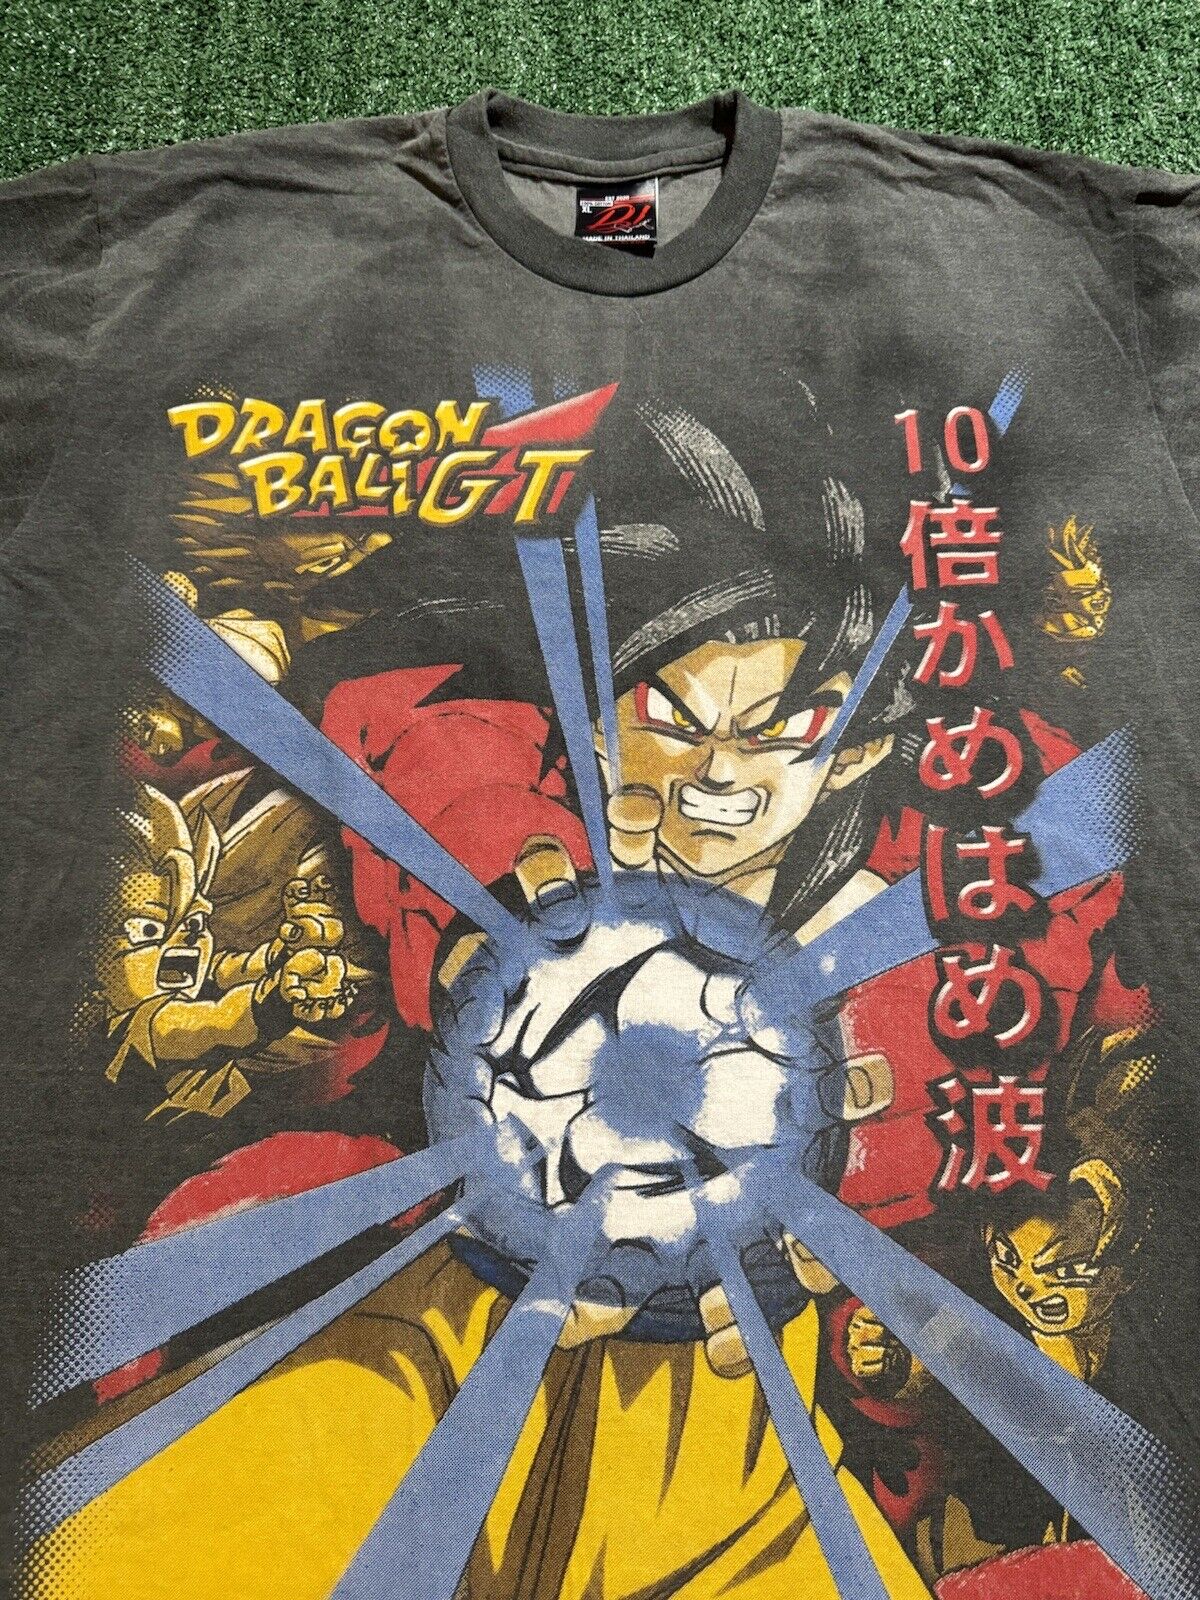 VTG Dragonball GT Shirt Size XL Anime TV Promo Manga Shonen Jump Goku Baby RARE